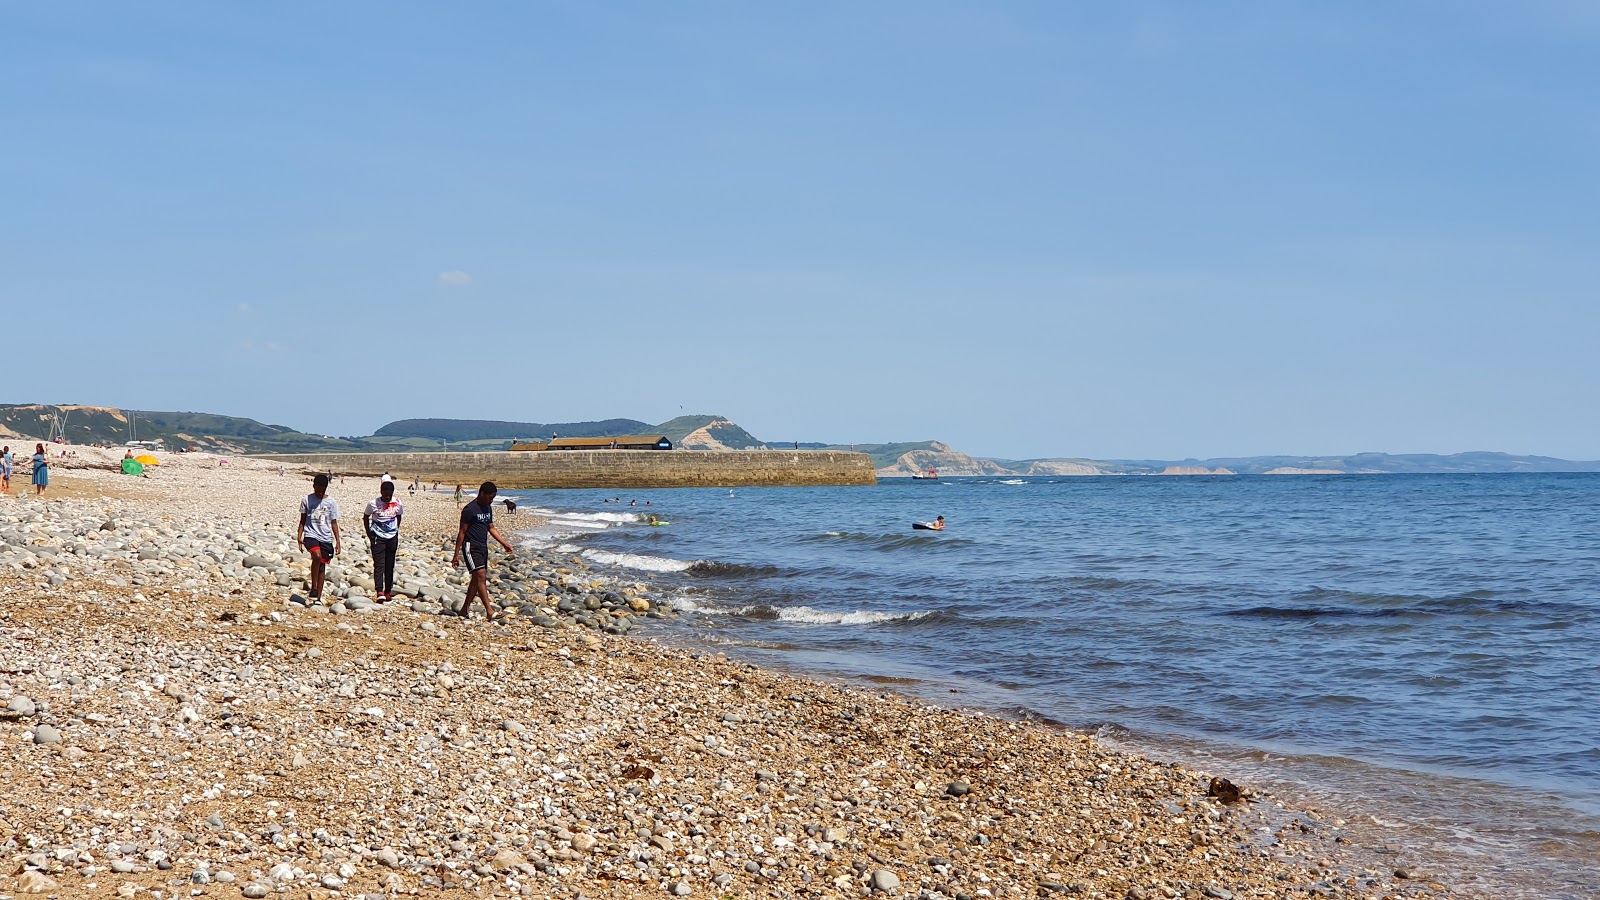 Fotografie cu Monmouth beach cu nivelul de curățenie in medie